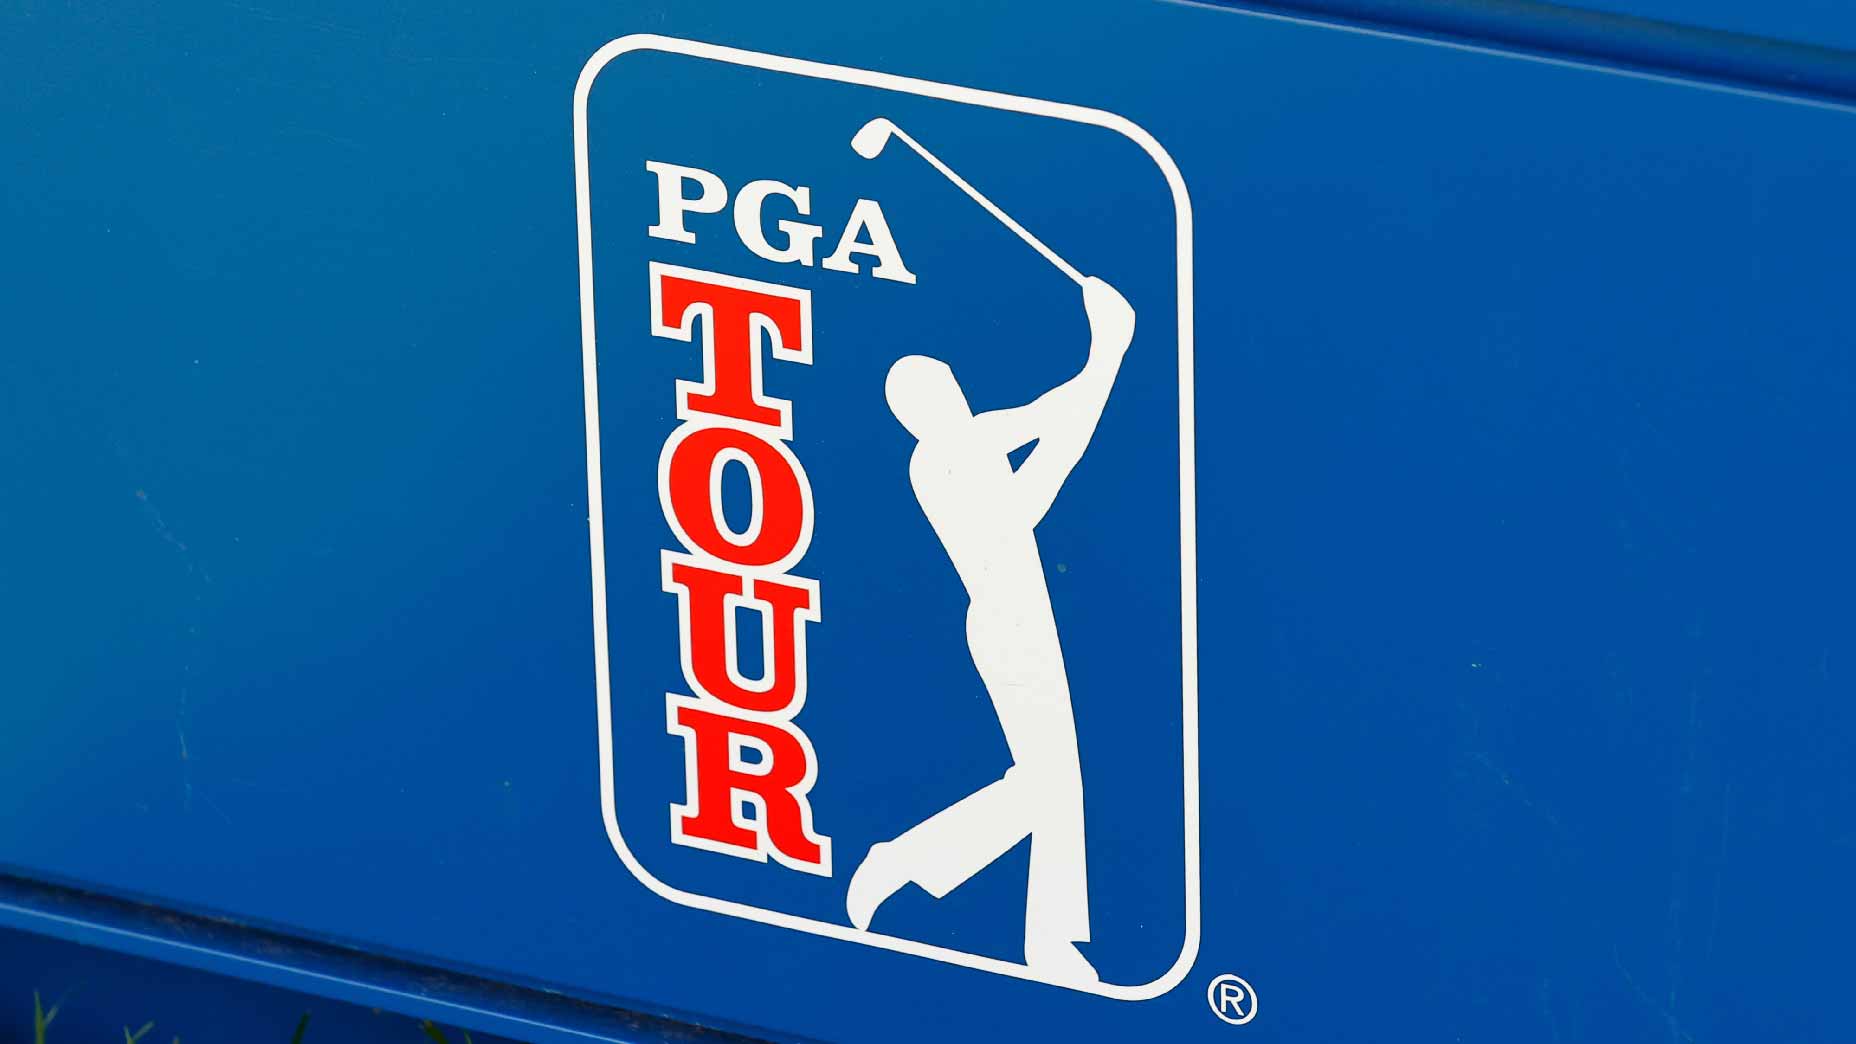 PGA TourLIV merger Senate Hearing Live updates from D.C.